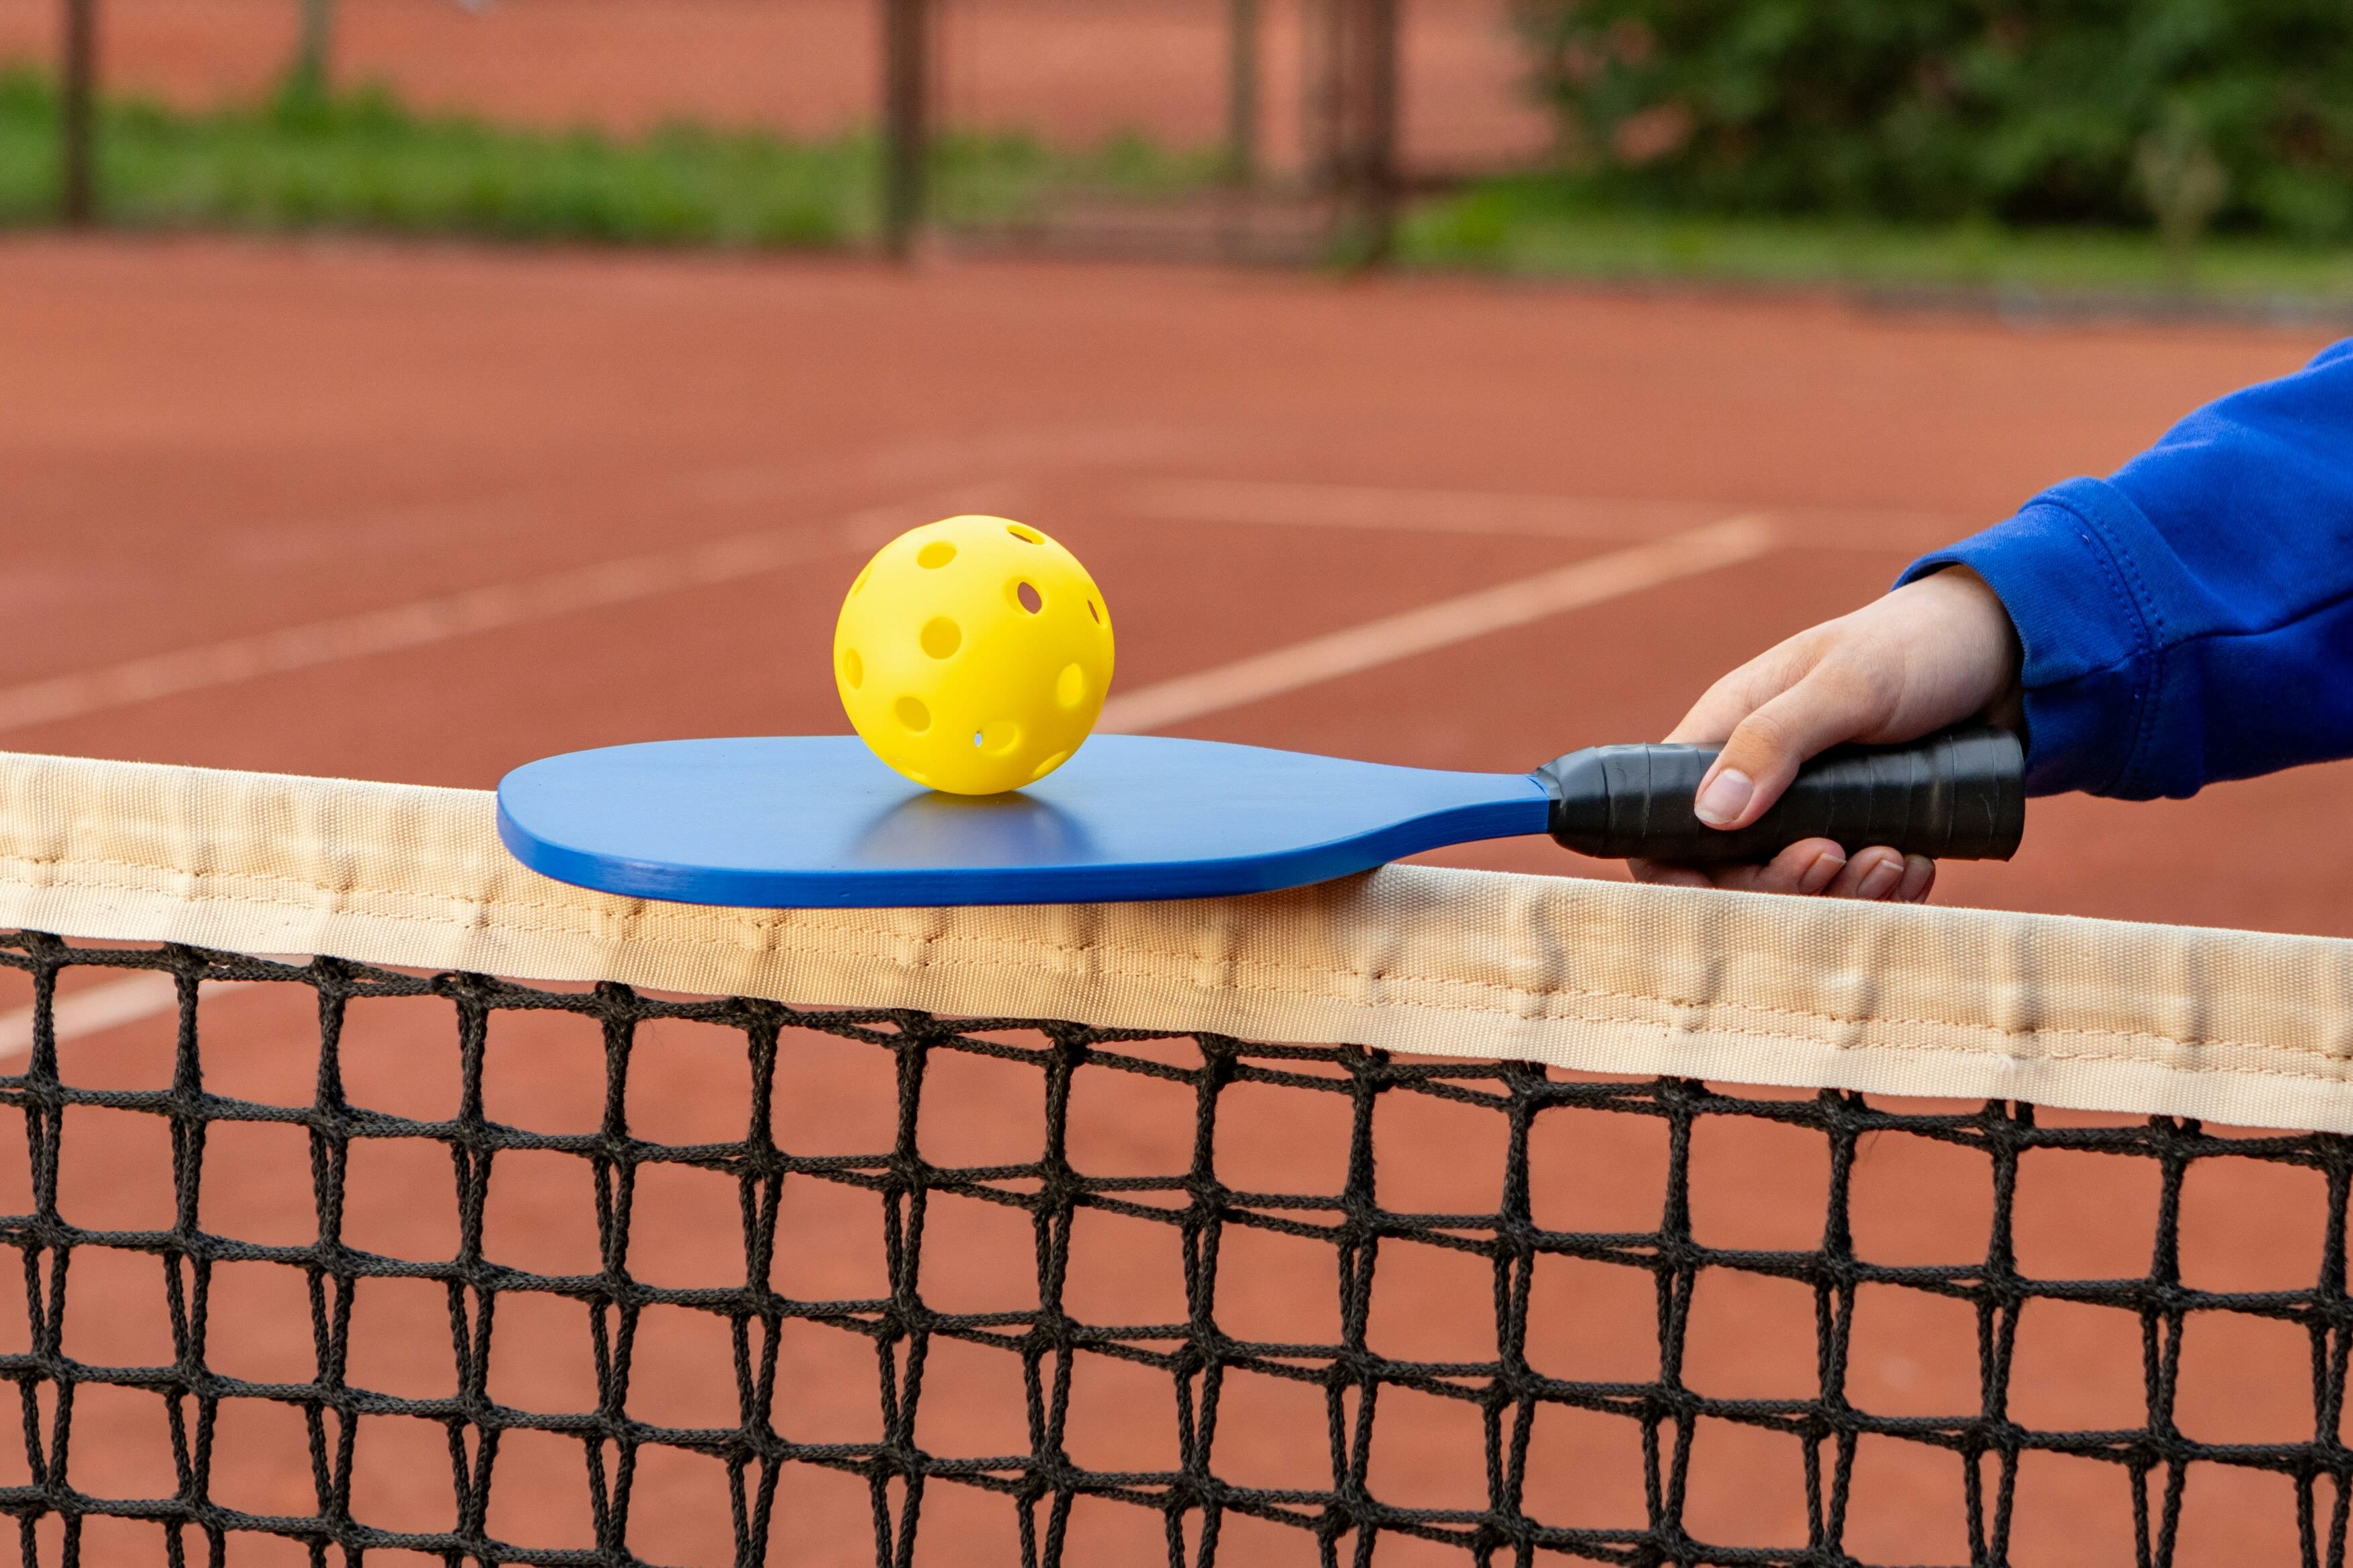 pickleball racquet and ball on a court